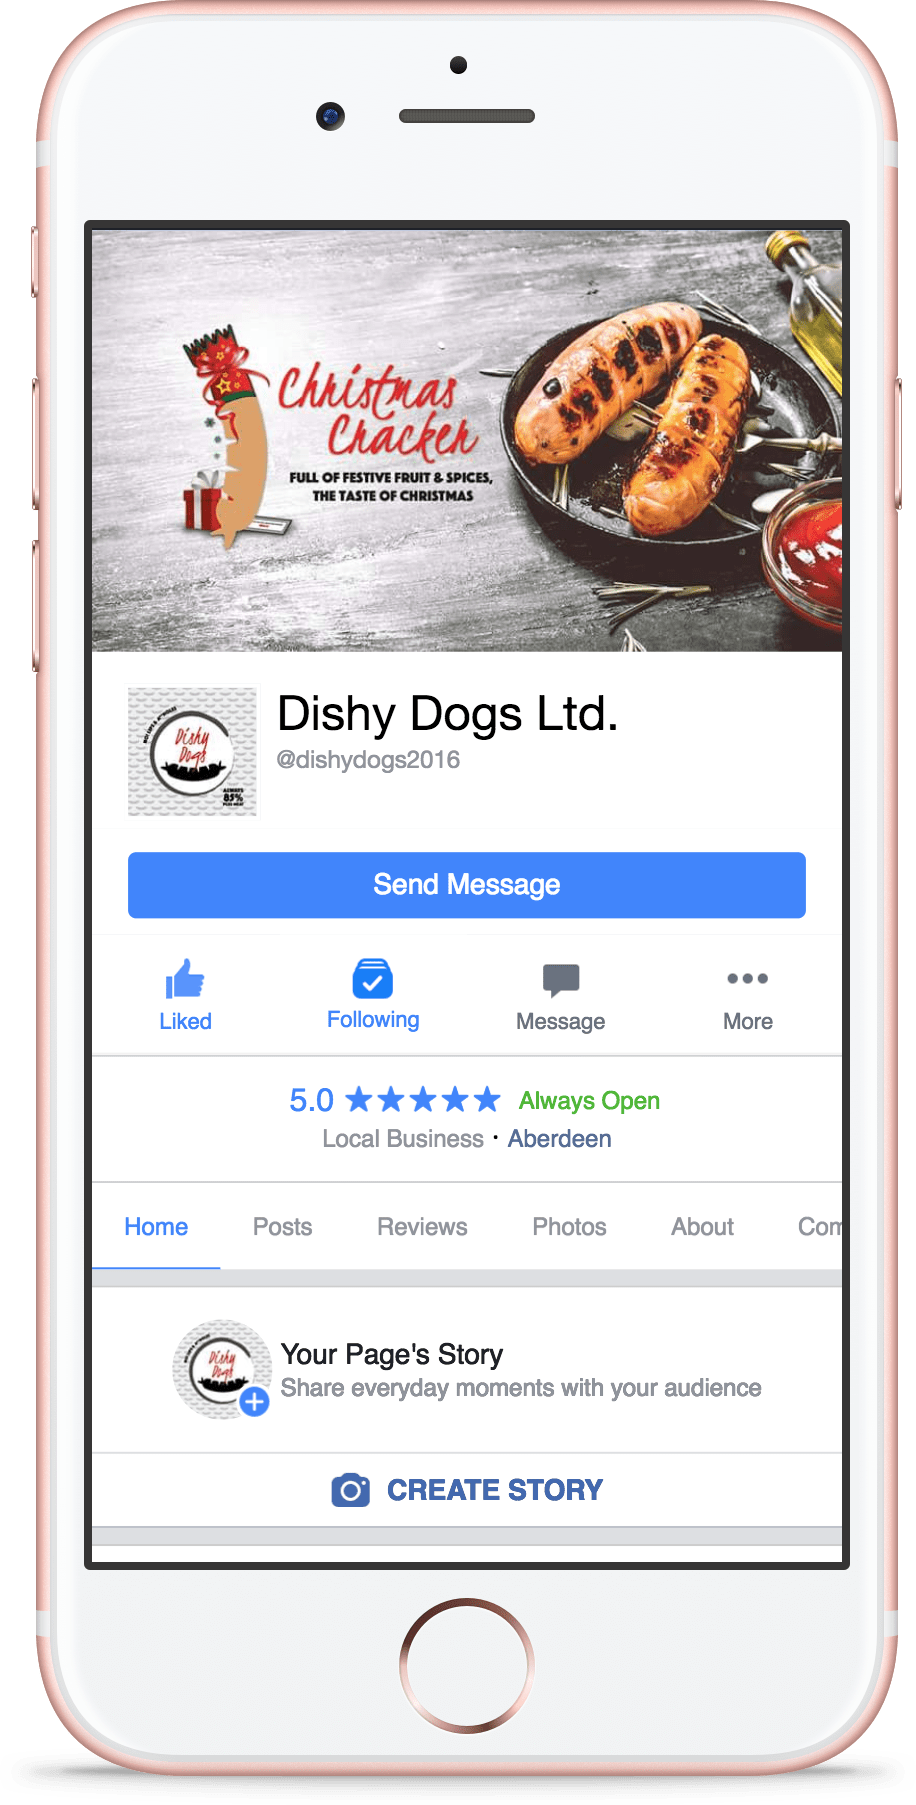 Dishy Dogs Branding Created By REASON Agency Aberdeen